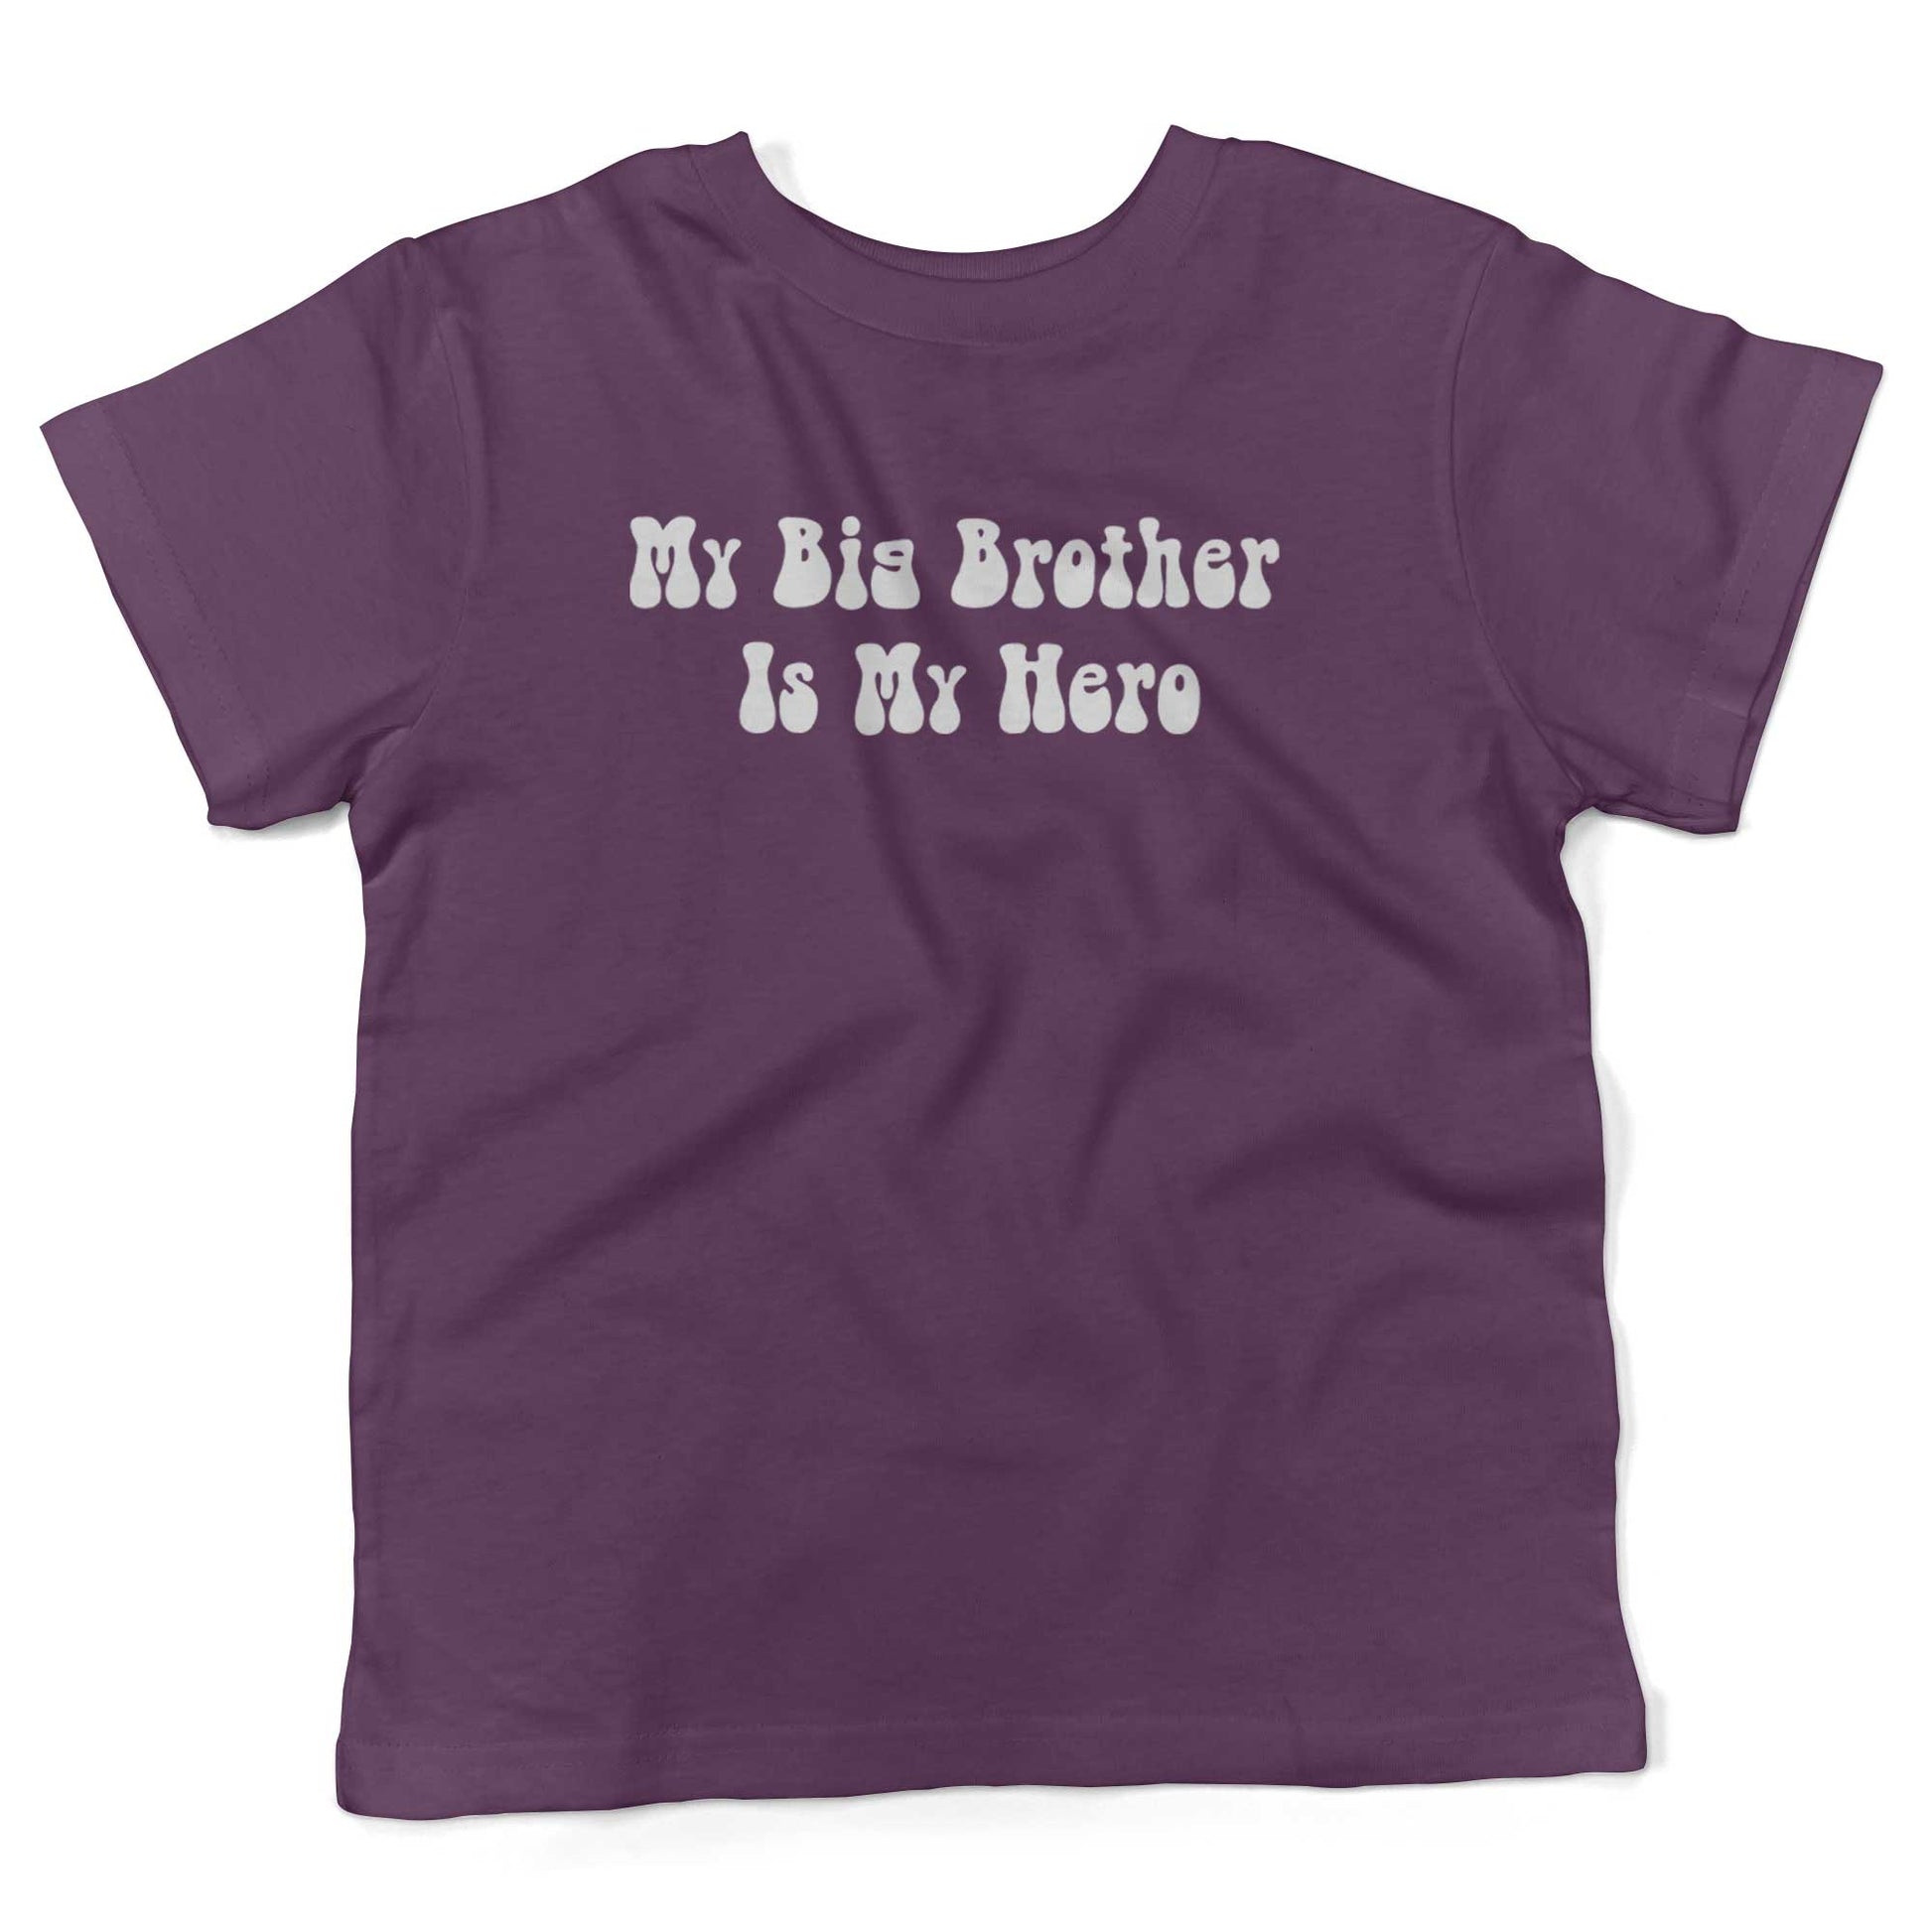 My Big Brother Is My Hero Toddler Shirt-Organic Purple-2T